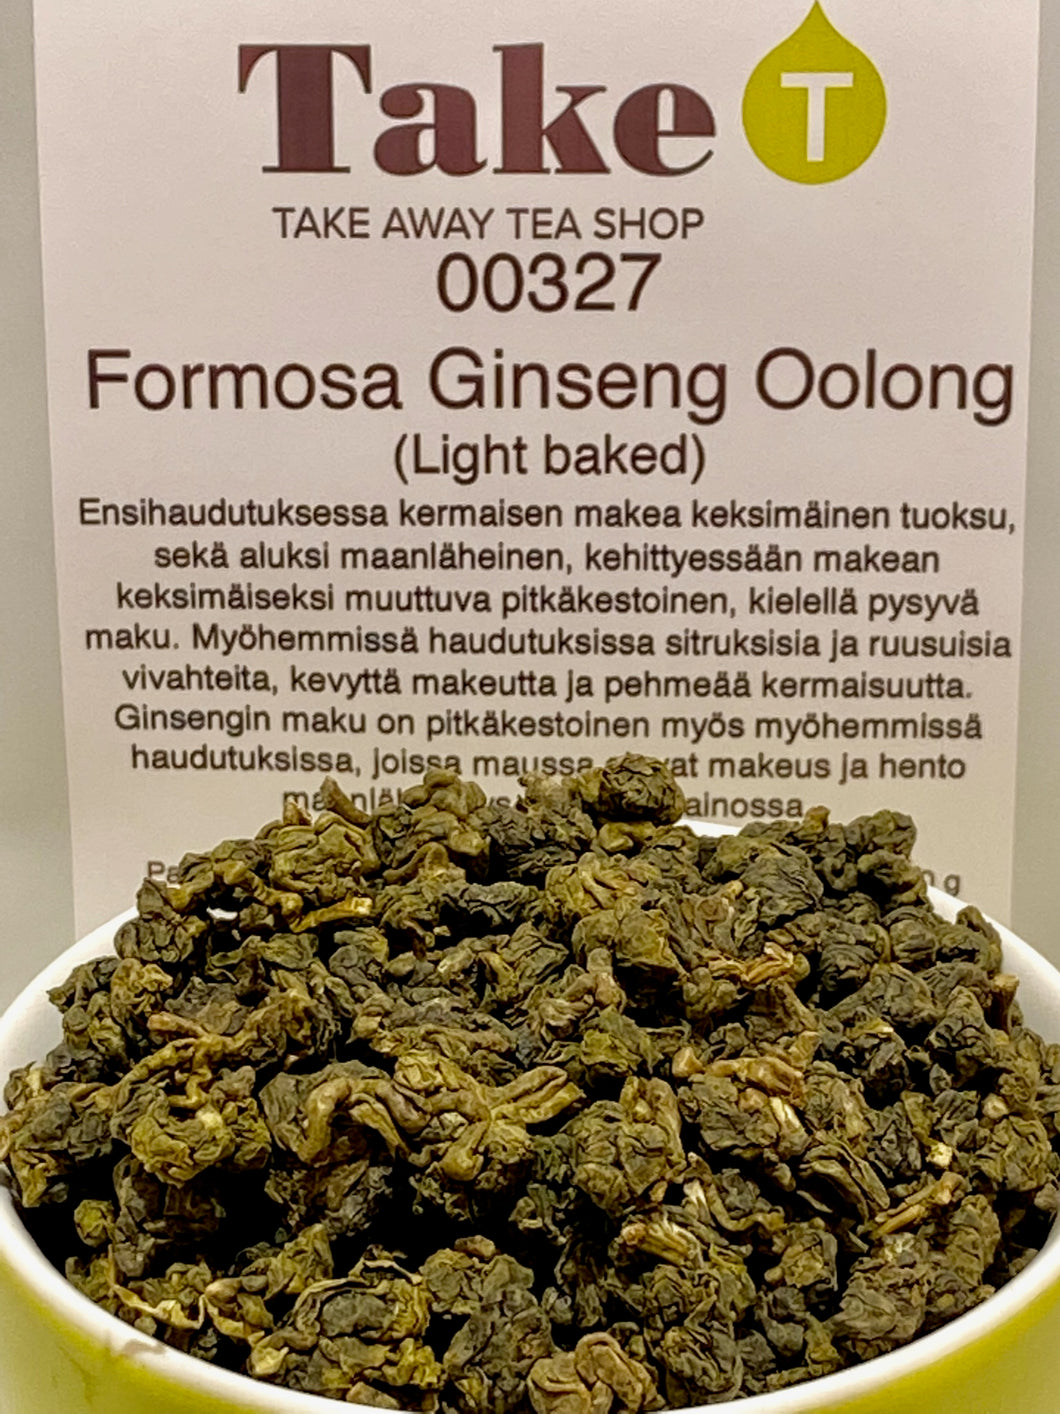 Formosa Ginseng Oolong (light baked)